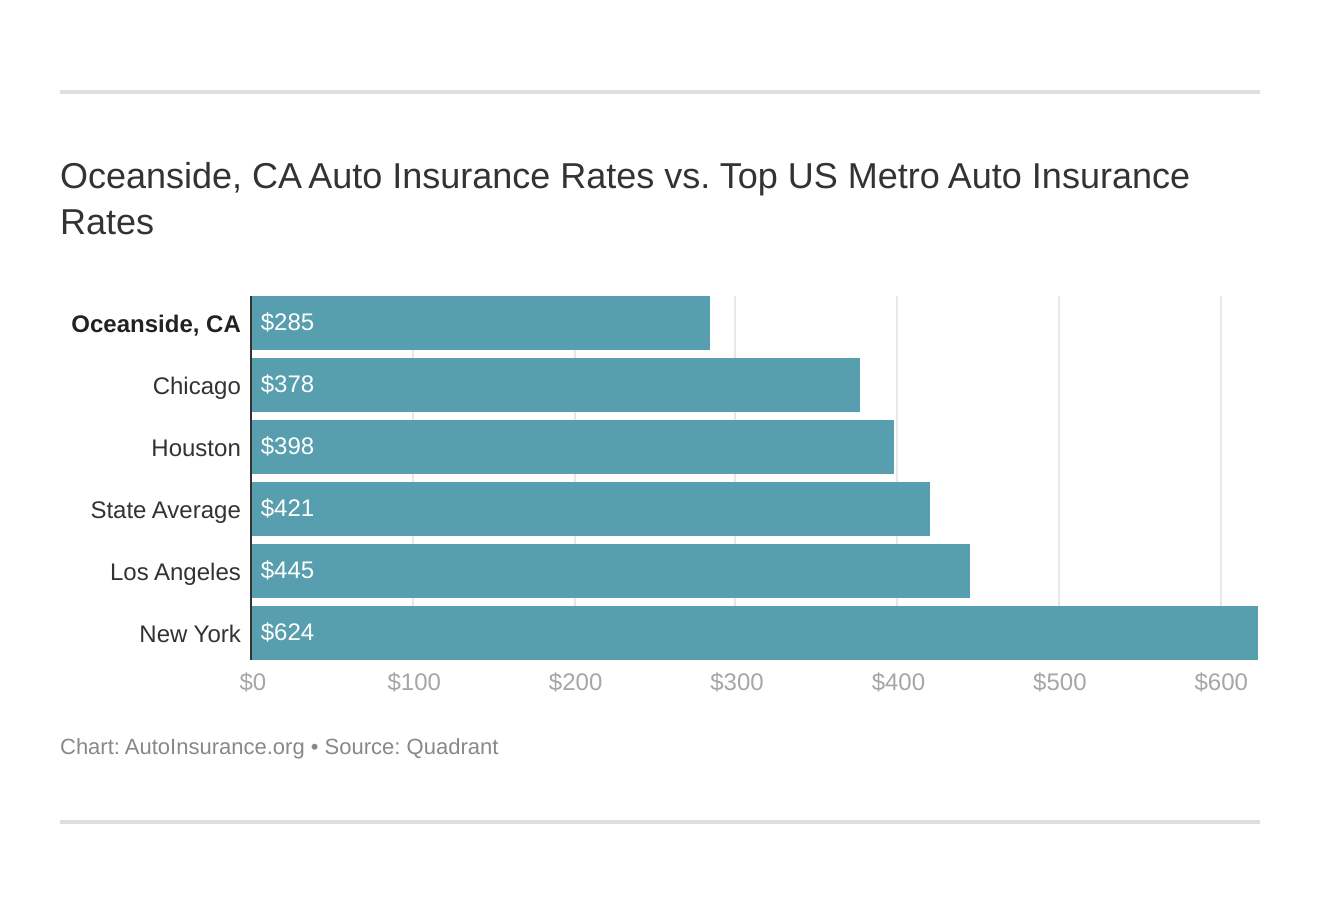 Oceanside, CA Auto Insurance Rates vs. Top US Metro Auto Insurance Rates